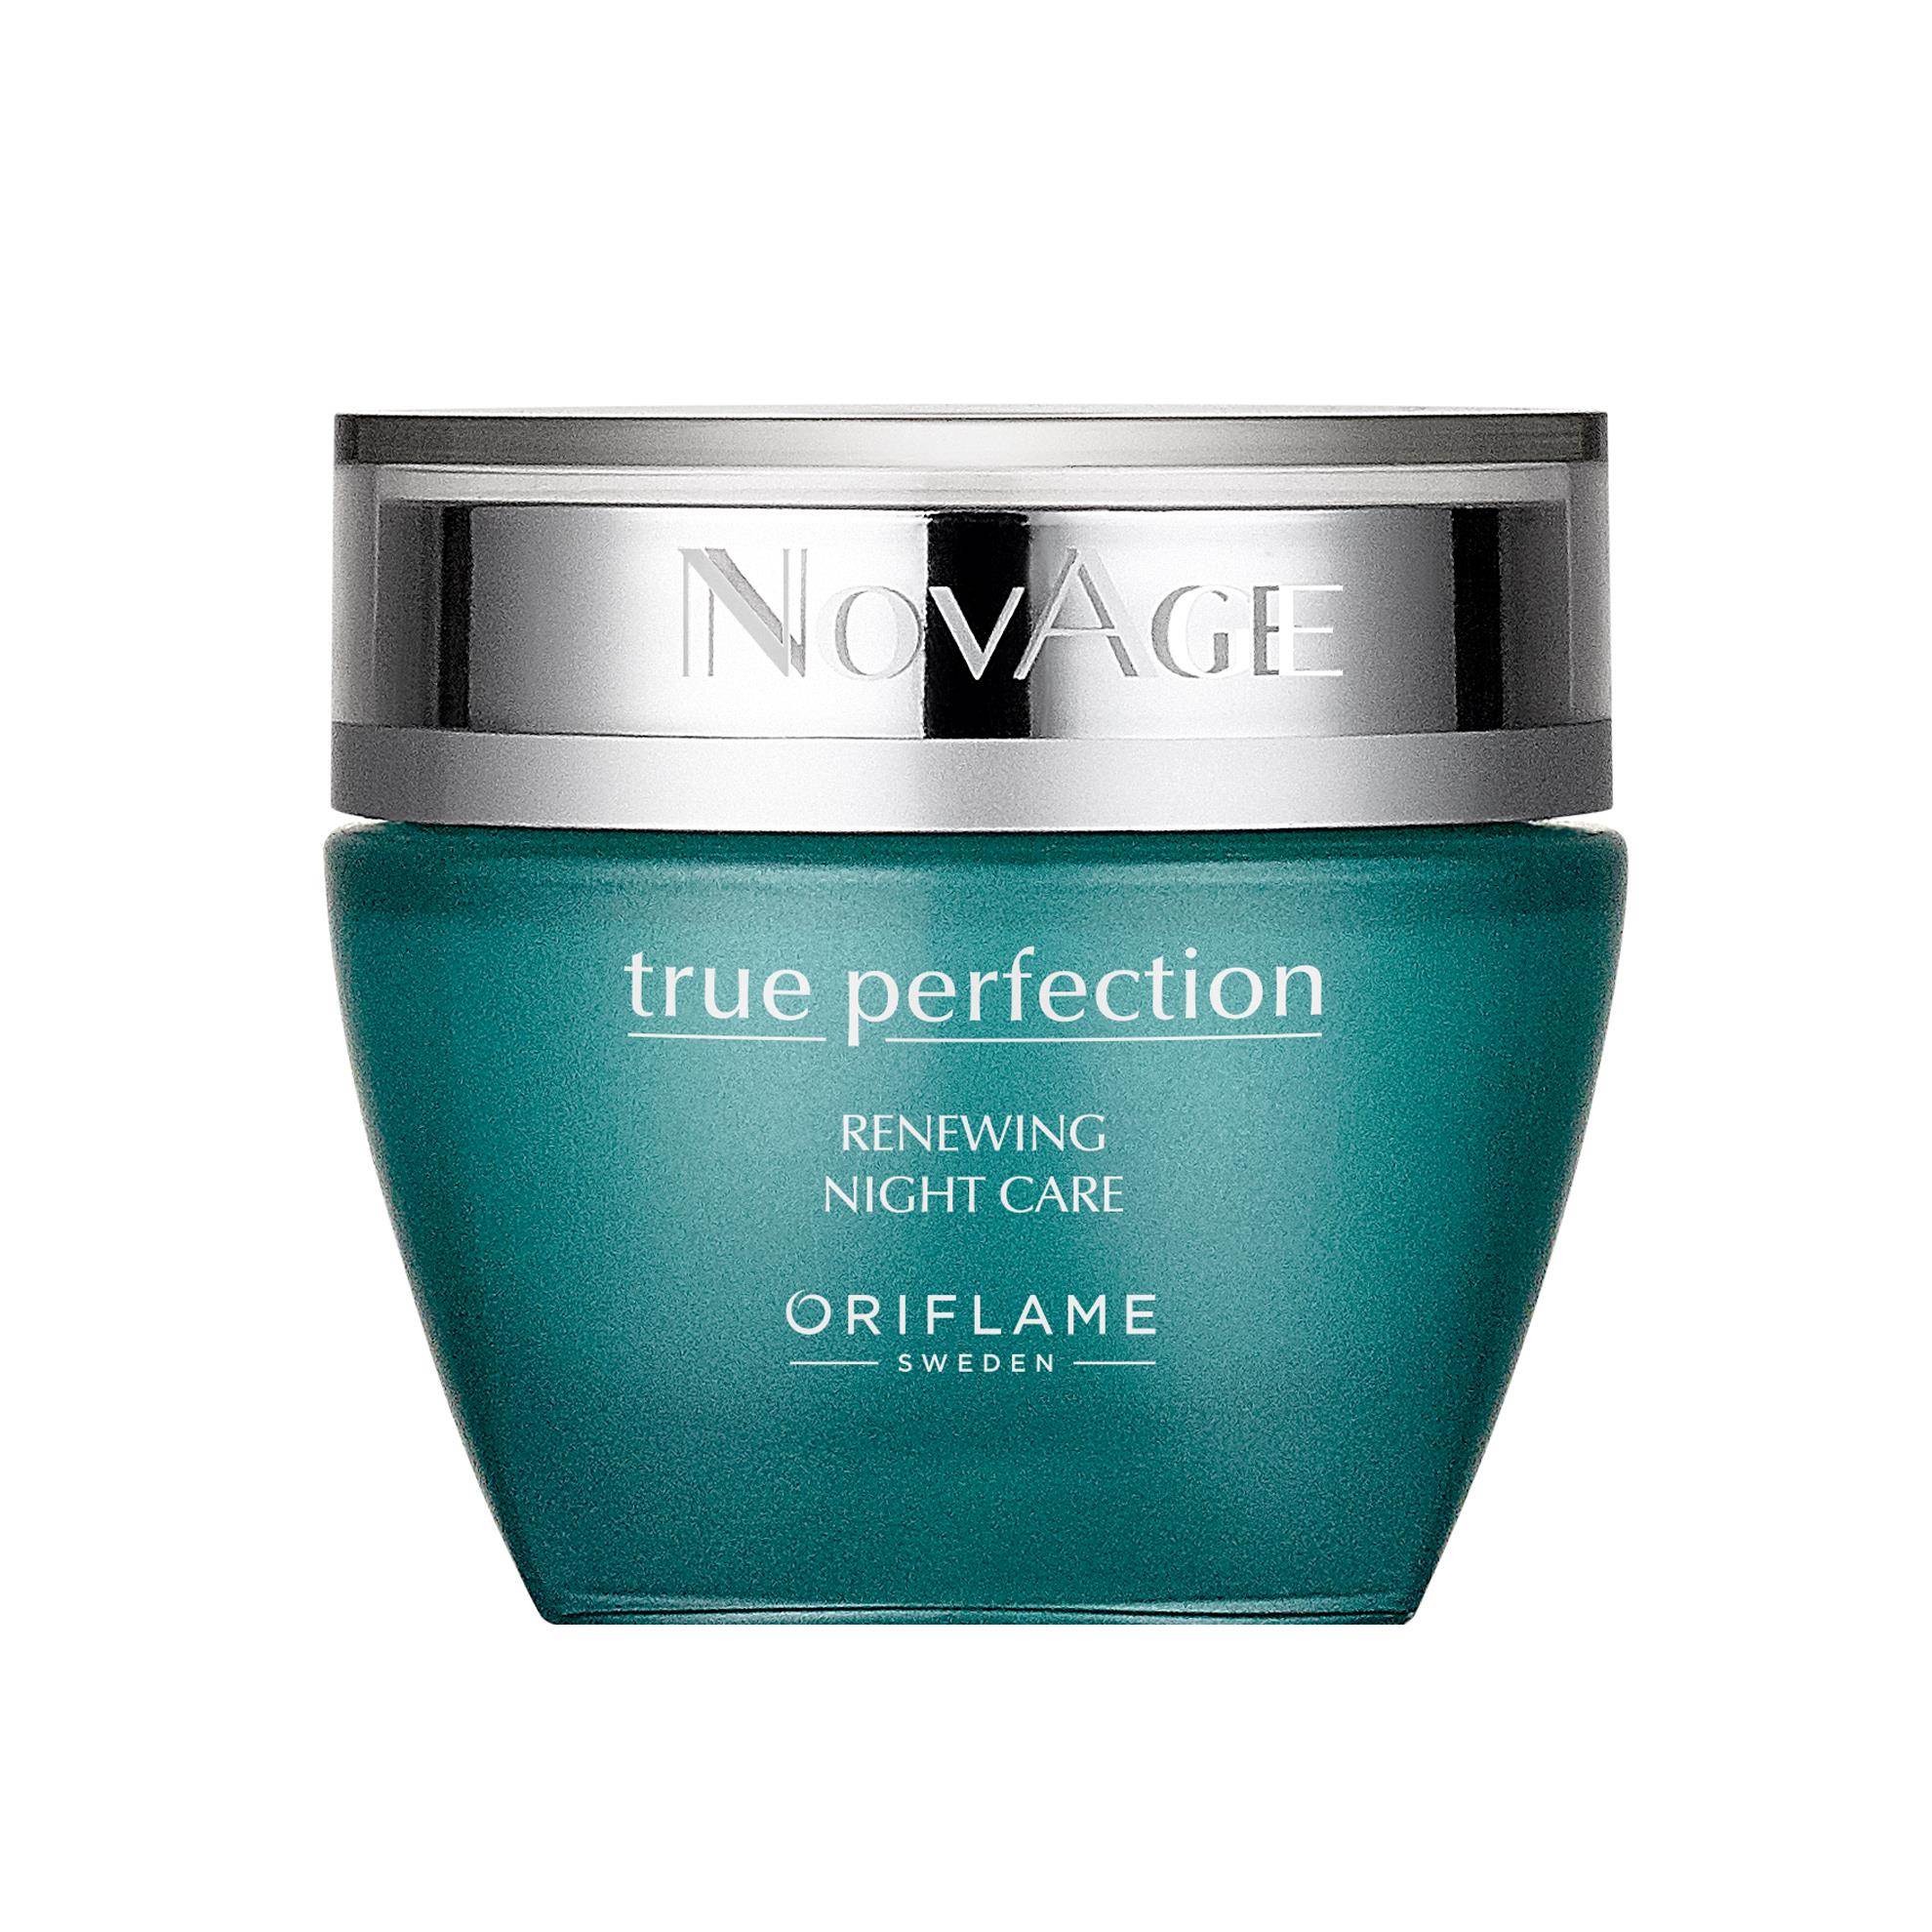 novage-true-perfection-renewing-night-care